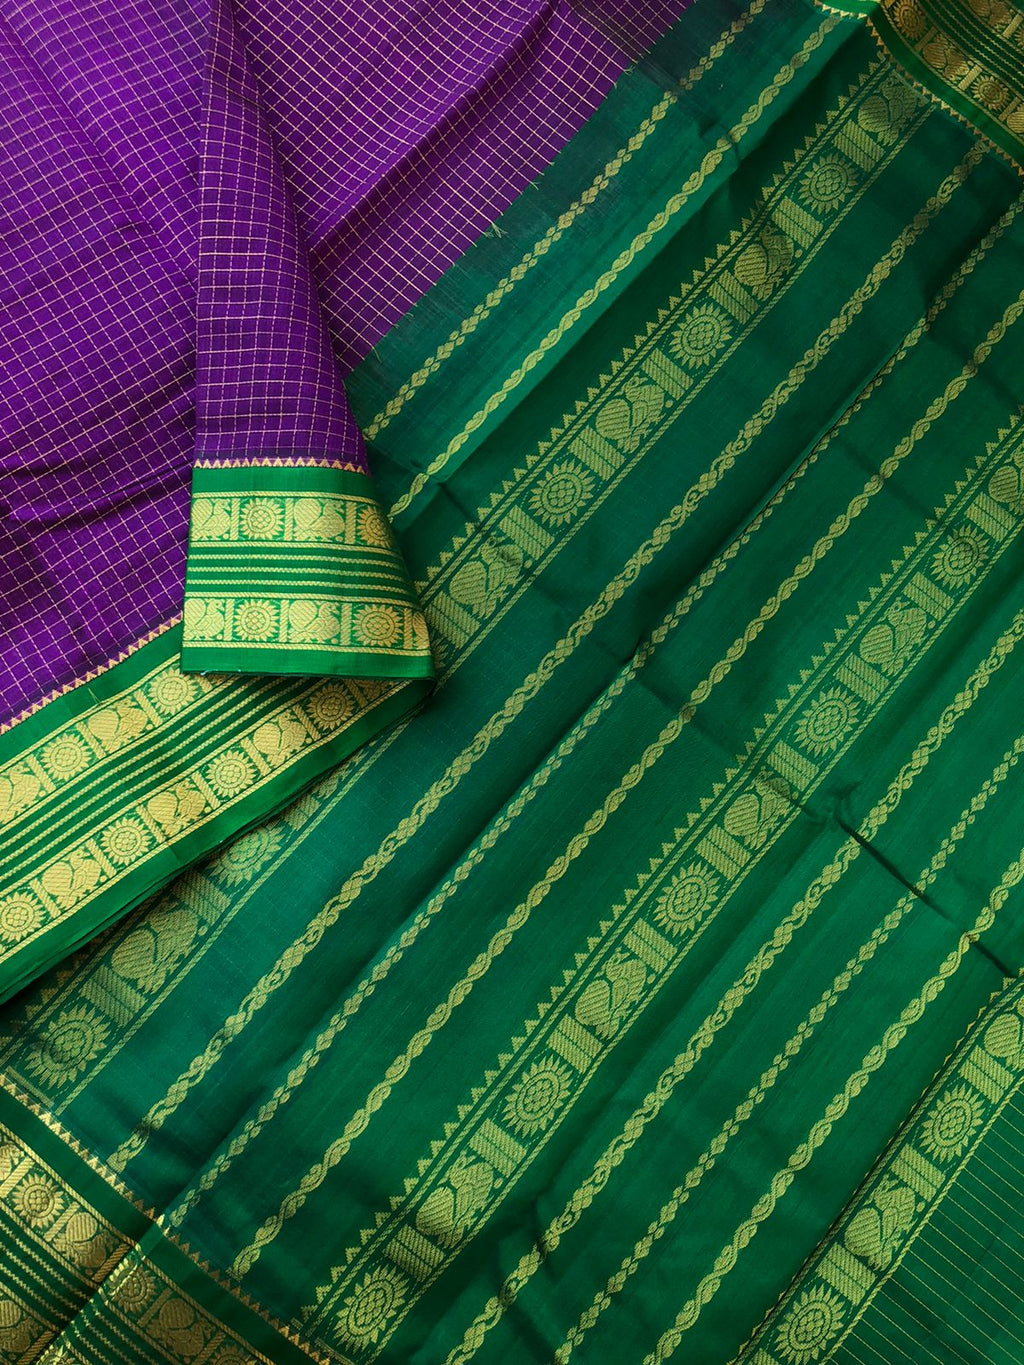 Kattams on Korvai Silk Cotton - deep purple and Meenakshi green zari kattam